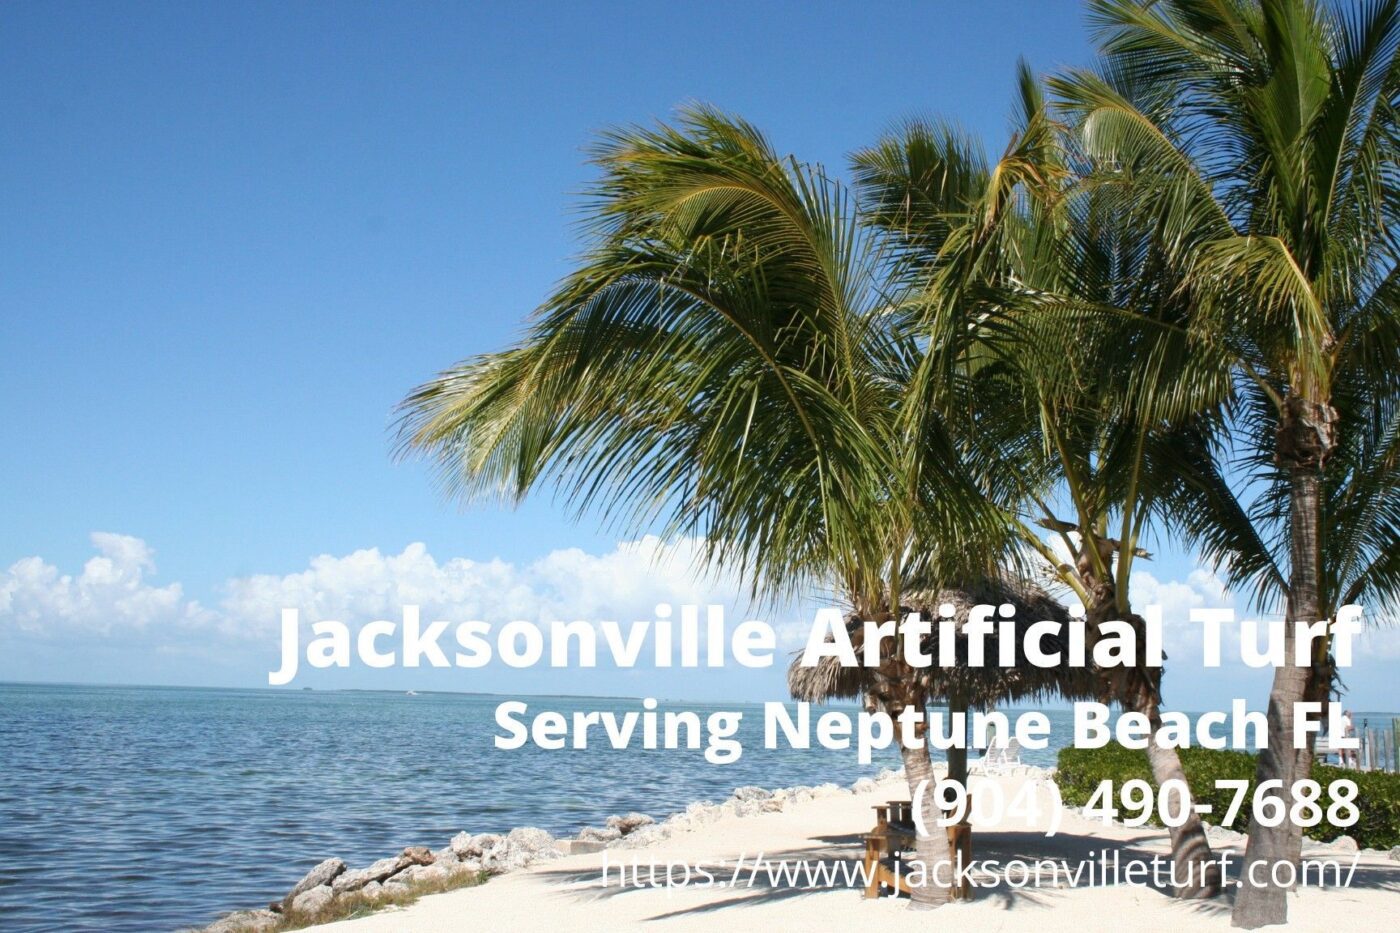 business details of Jacksonville Artificial Turf - a turf installer serving Neptune Beach FL